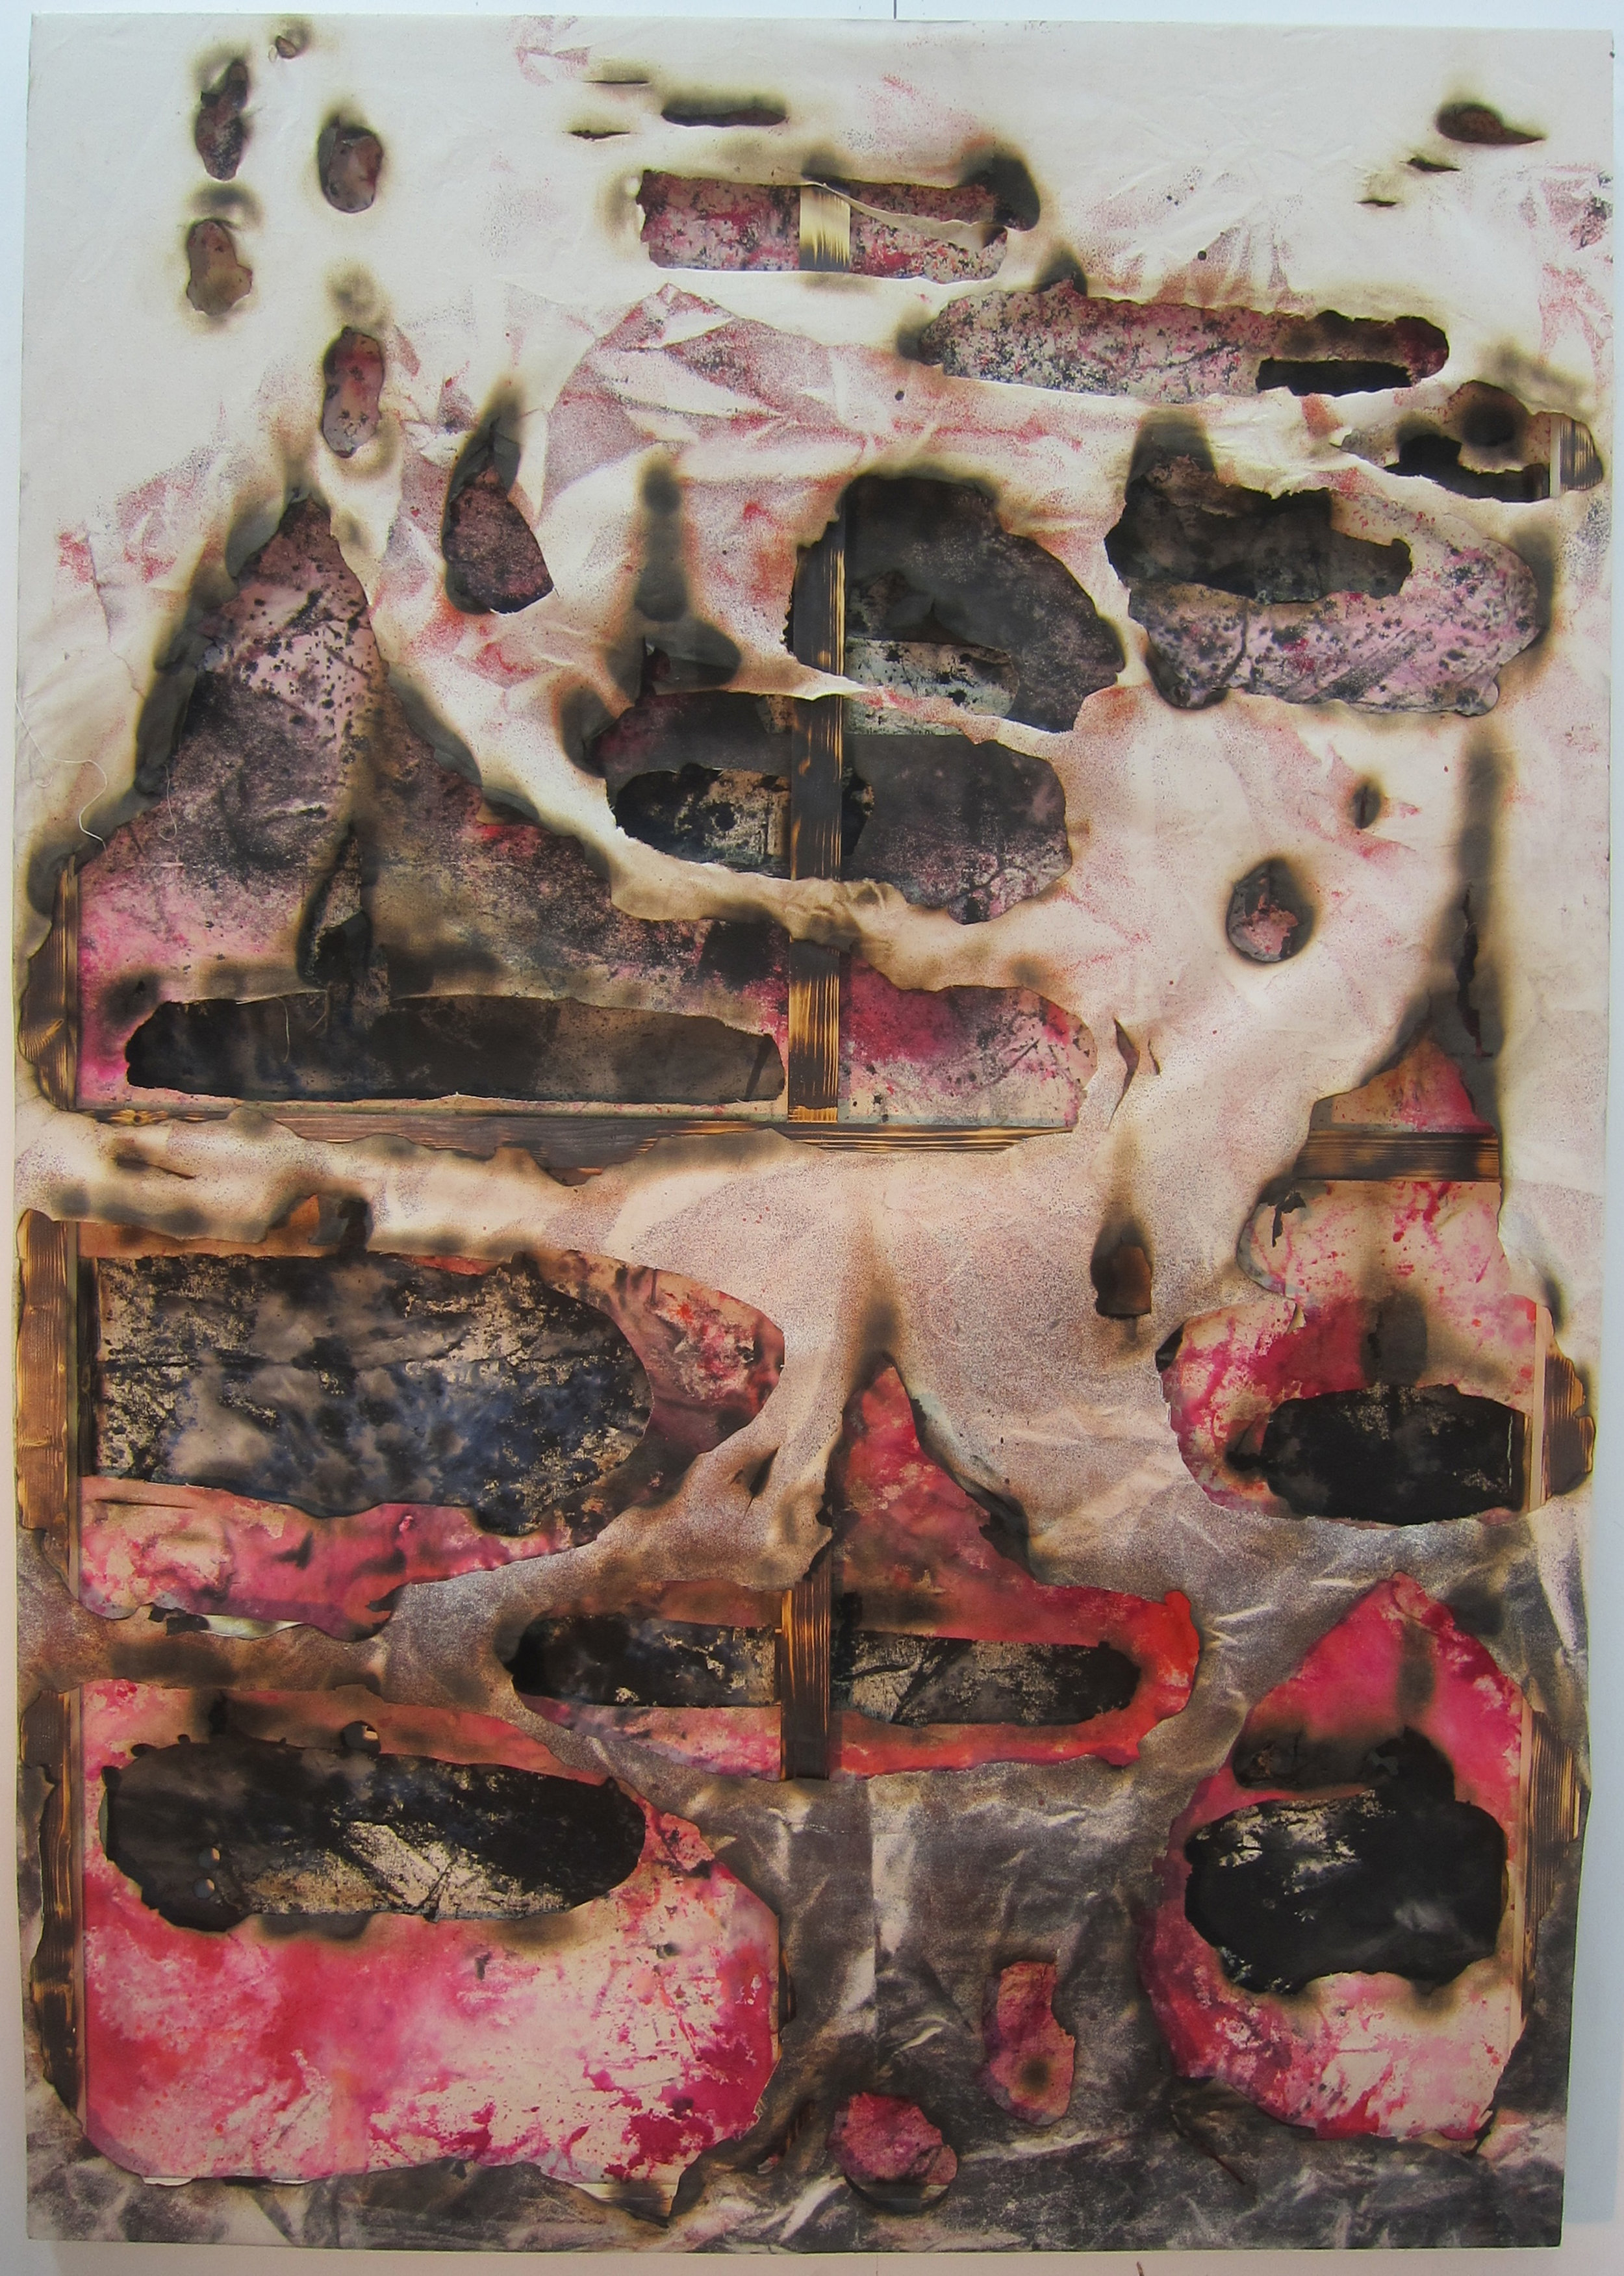   Post-Human Lasagne.   Alkyd resin, ink, water colour, bleach, fire and cotton.&nbsp;  200 x 140 x 9 cm.  2015.&nbsp; 